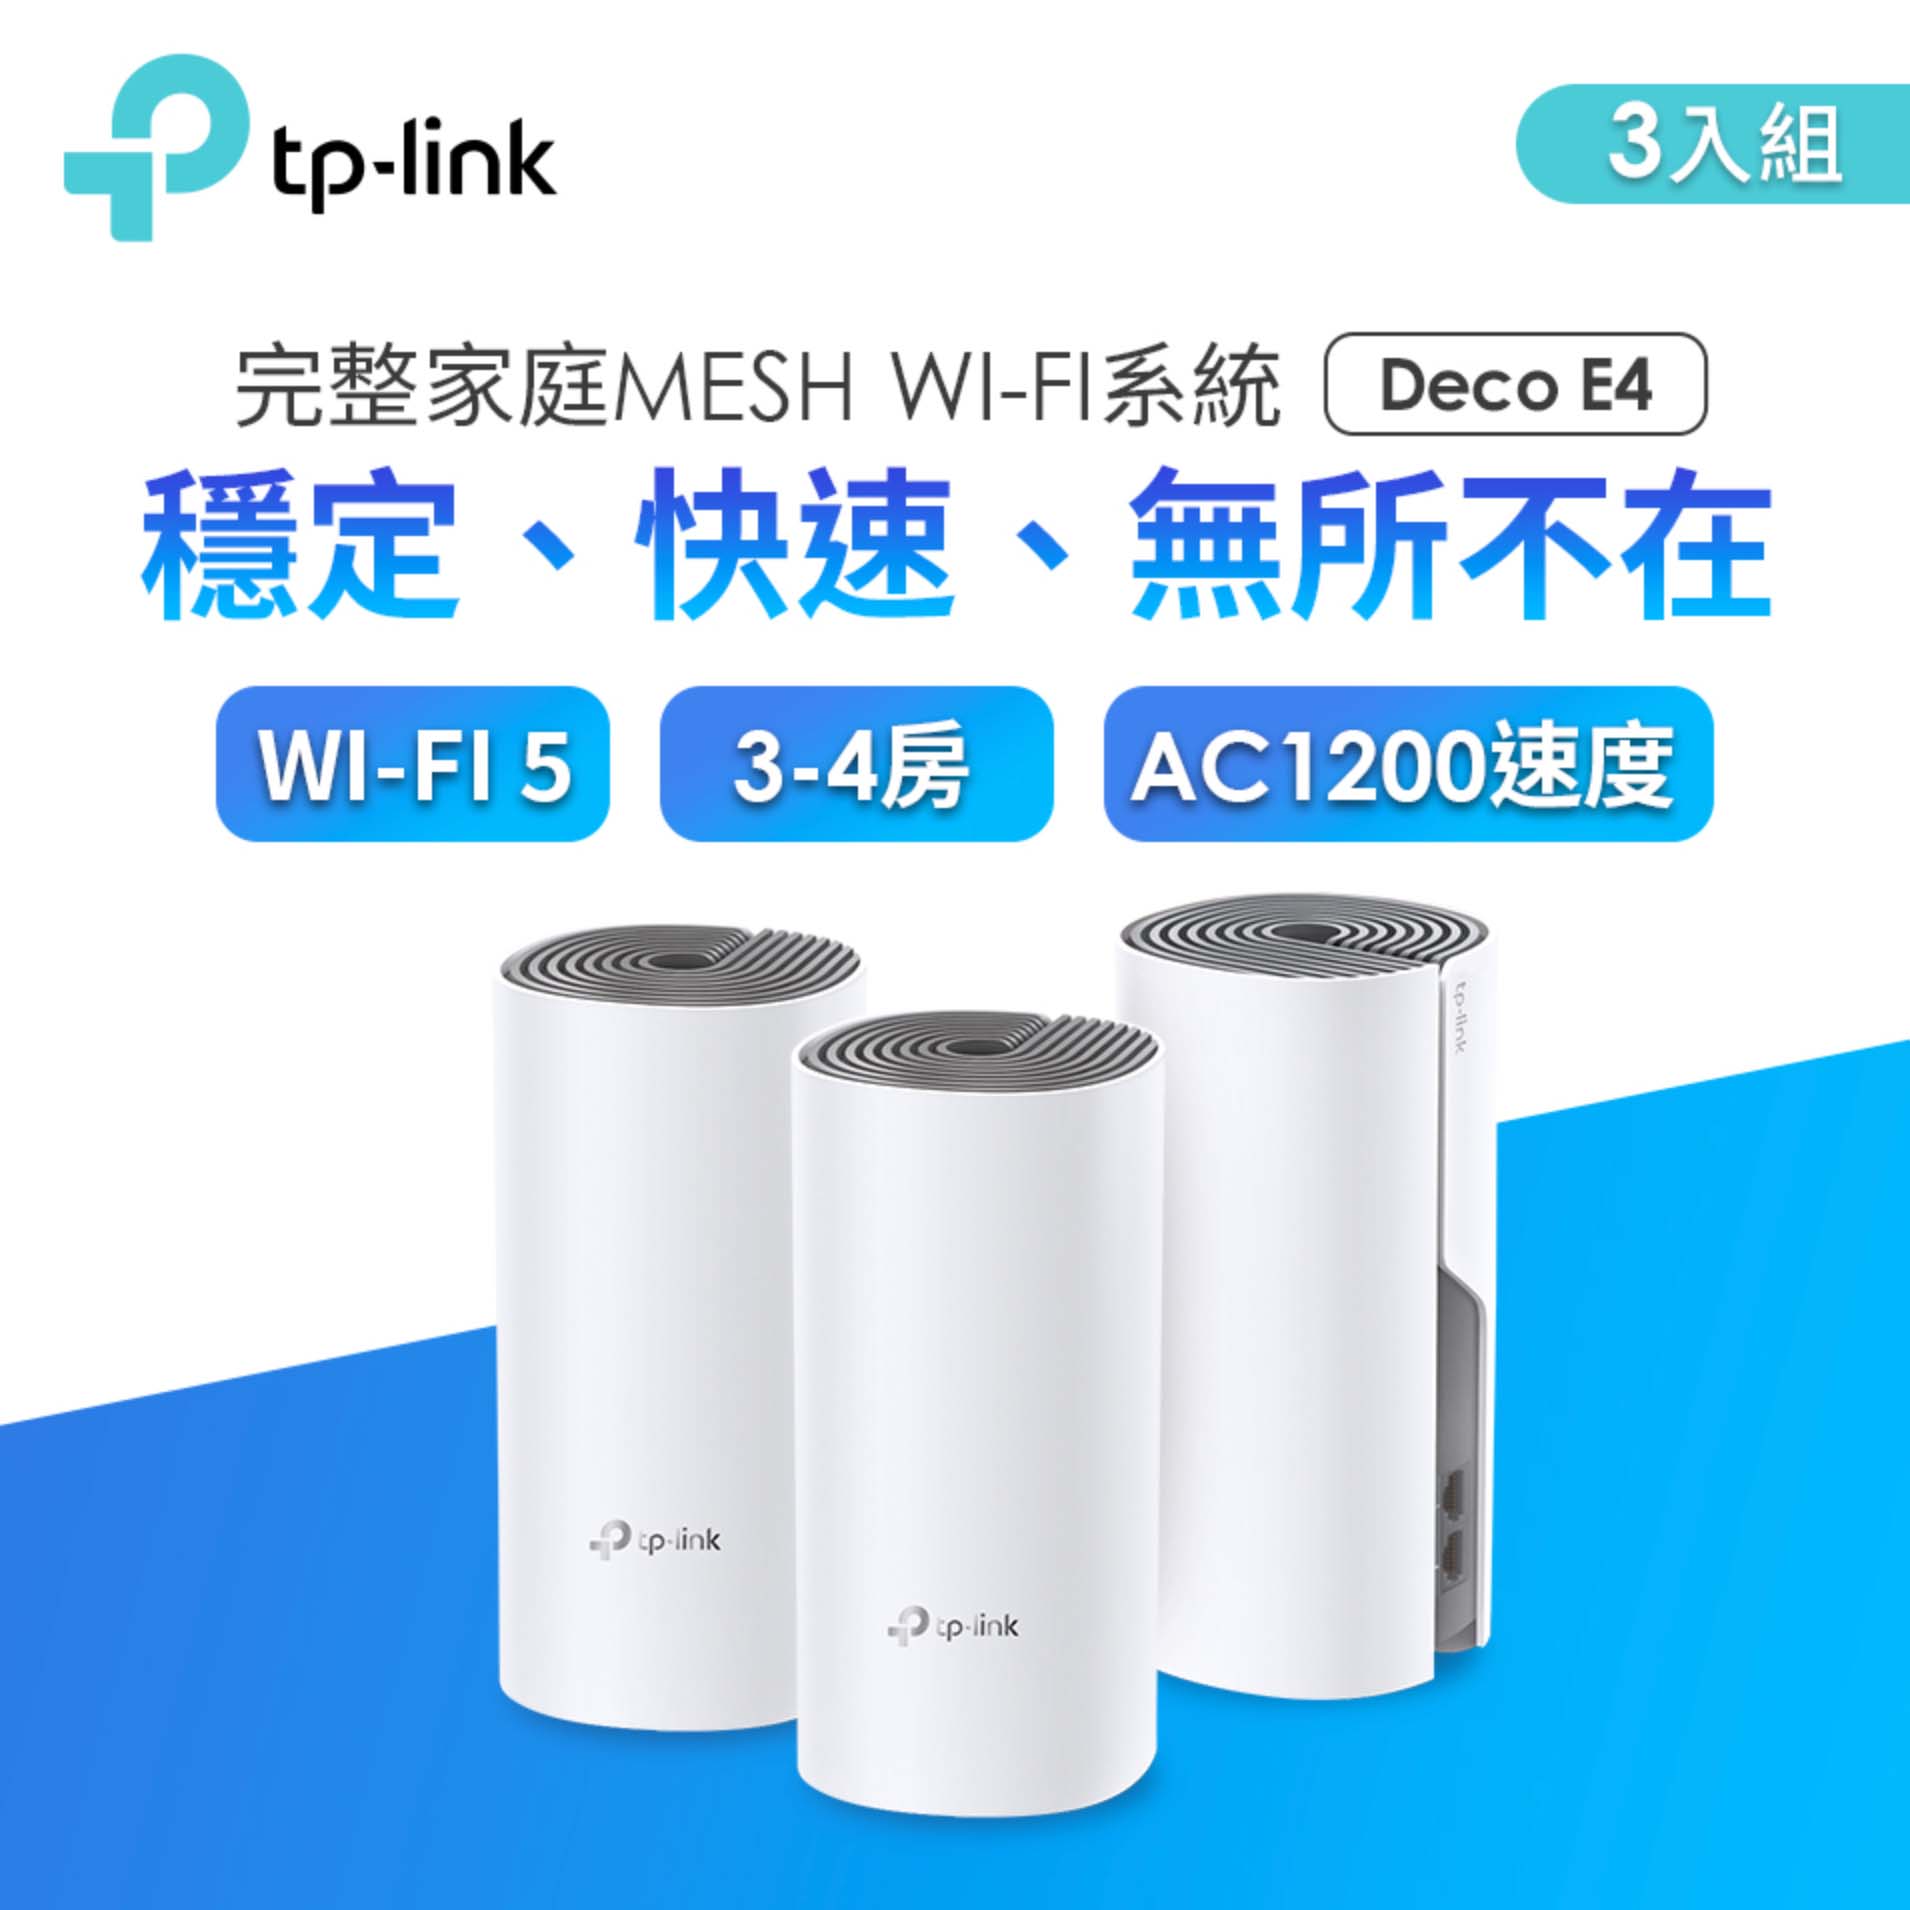 TP-LINK Deco E4智慧家庭Wi-Fi系統